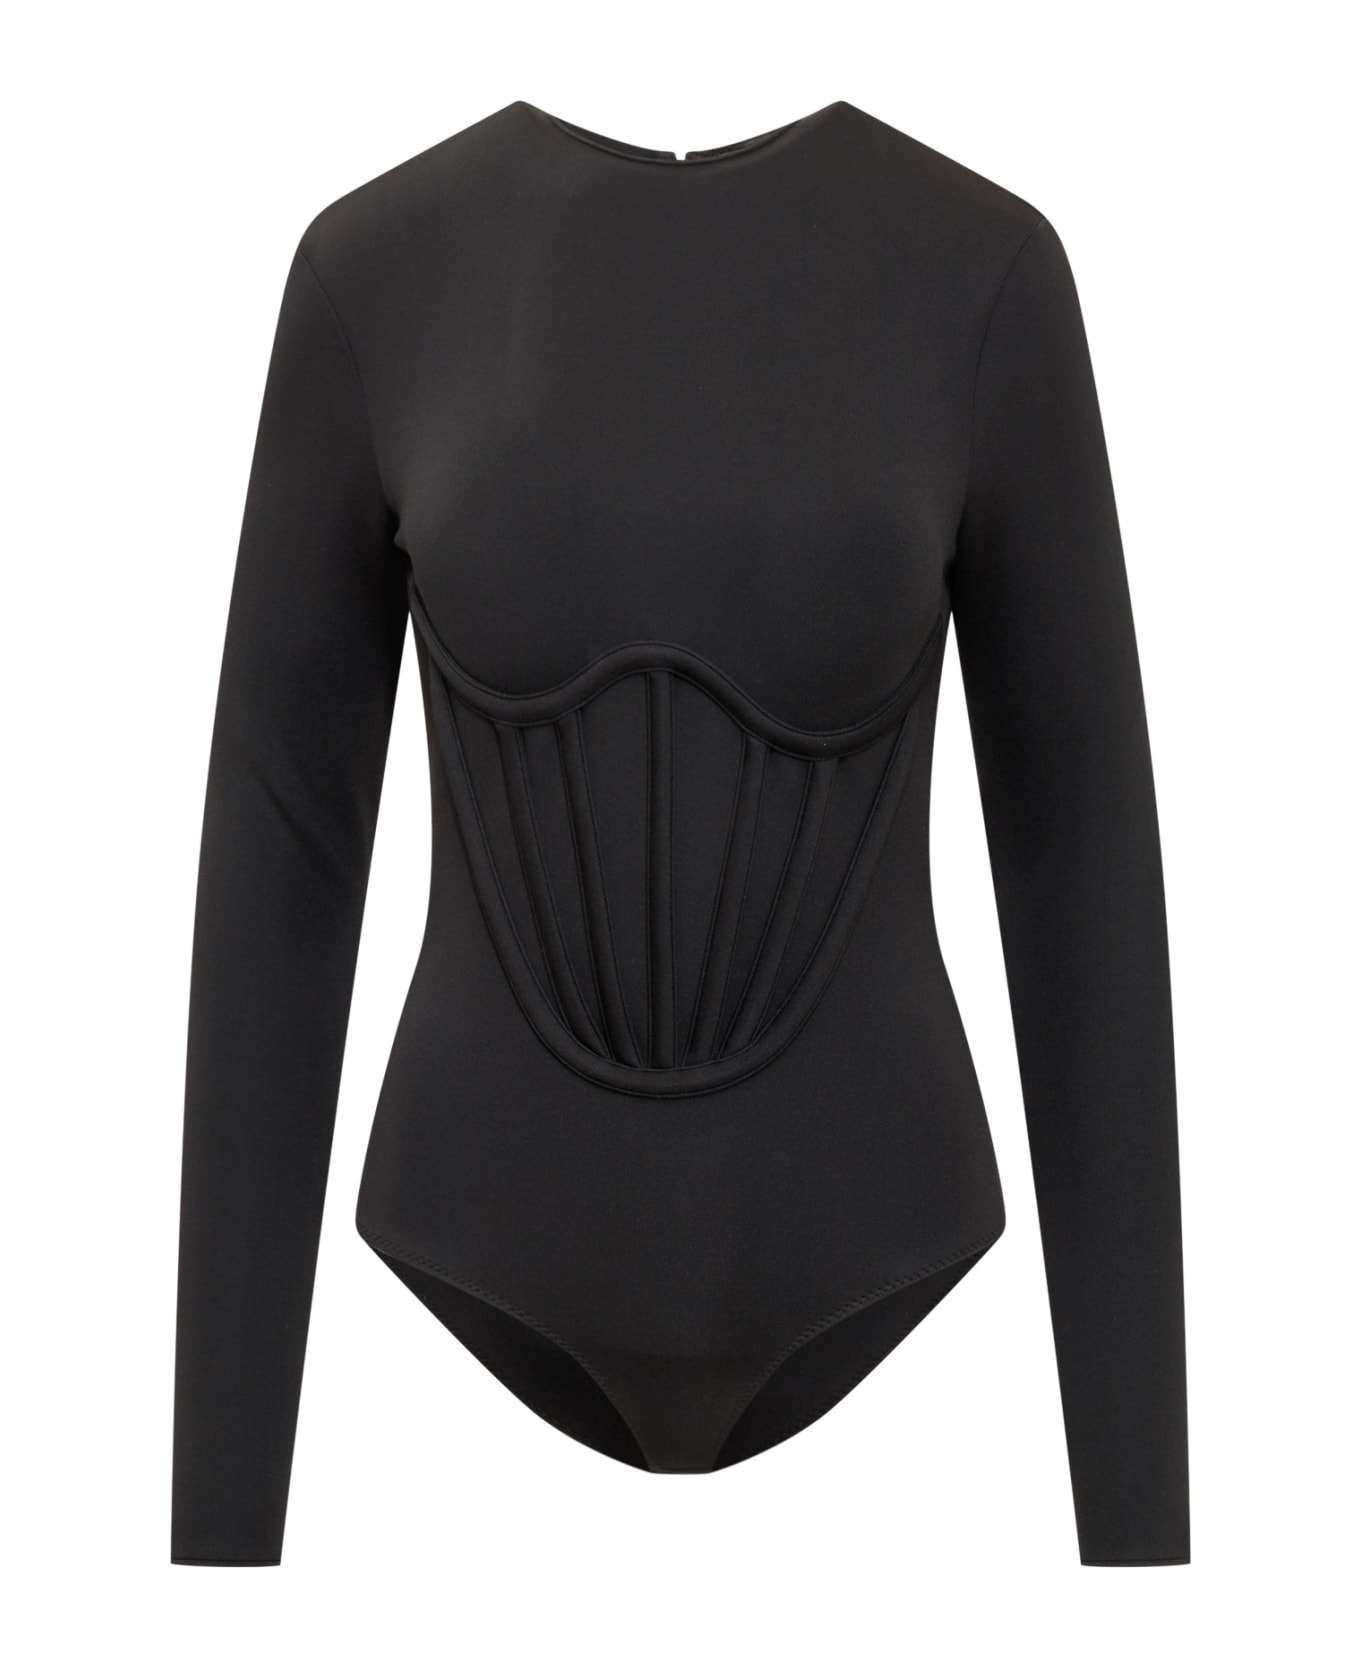 Versace Bodysuit With Zip - NERO ボディスーツ